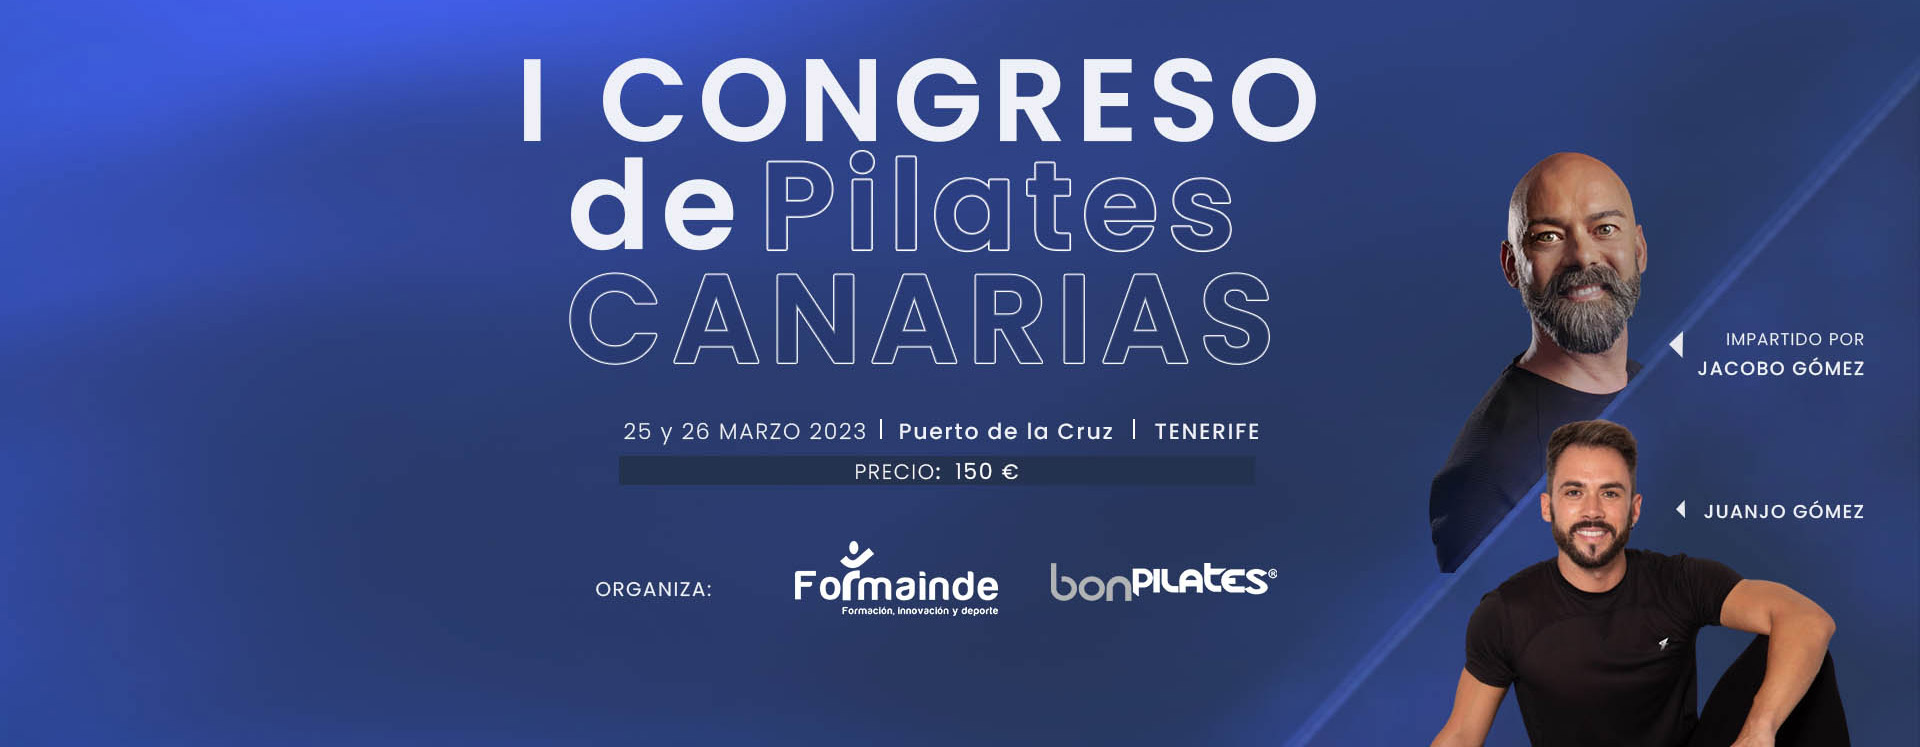 plantilla final titulos imagen congreso 1920x920 2 - I Congreso de Pilates Canarias